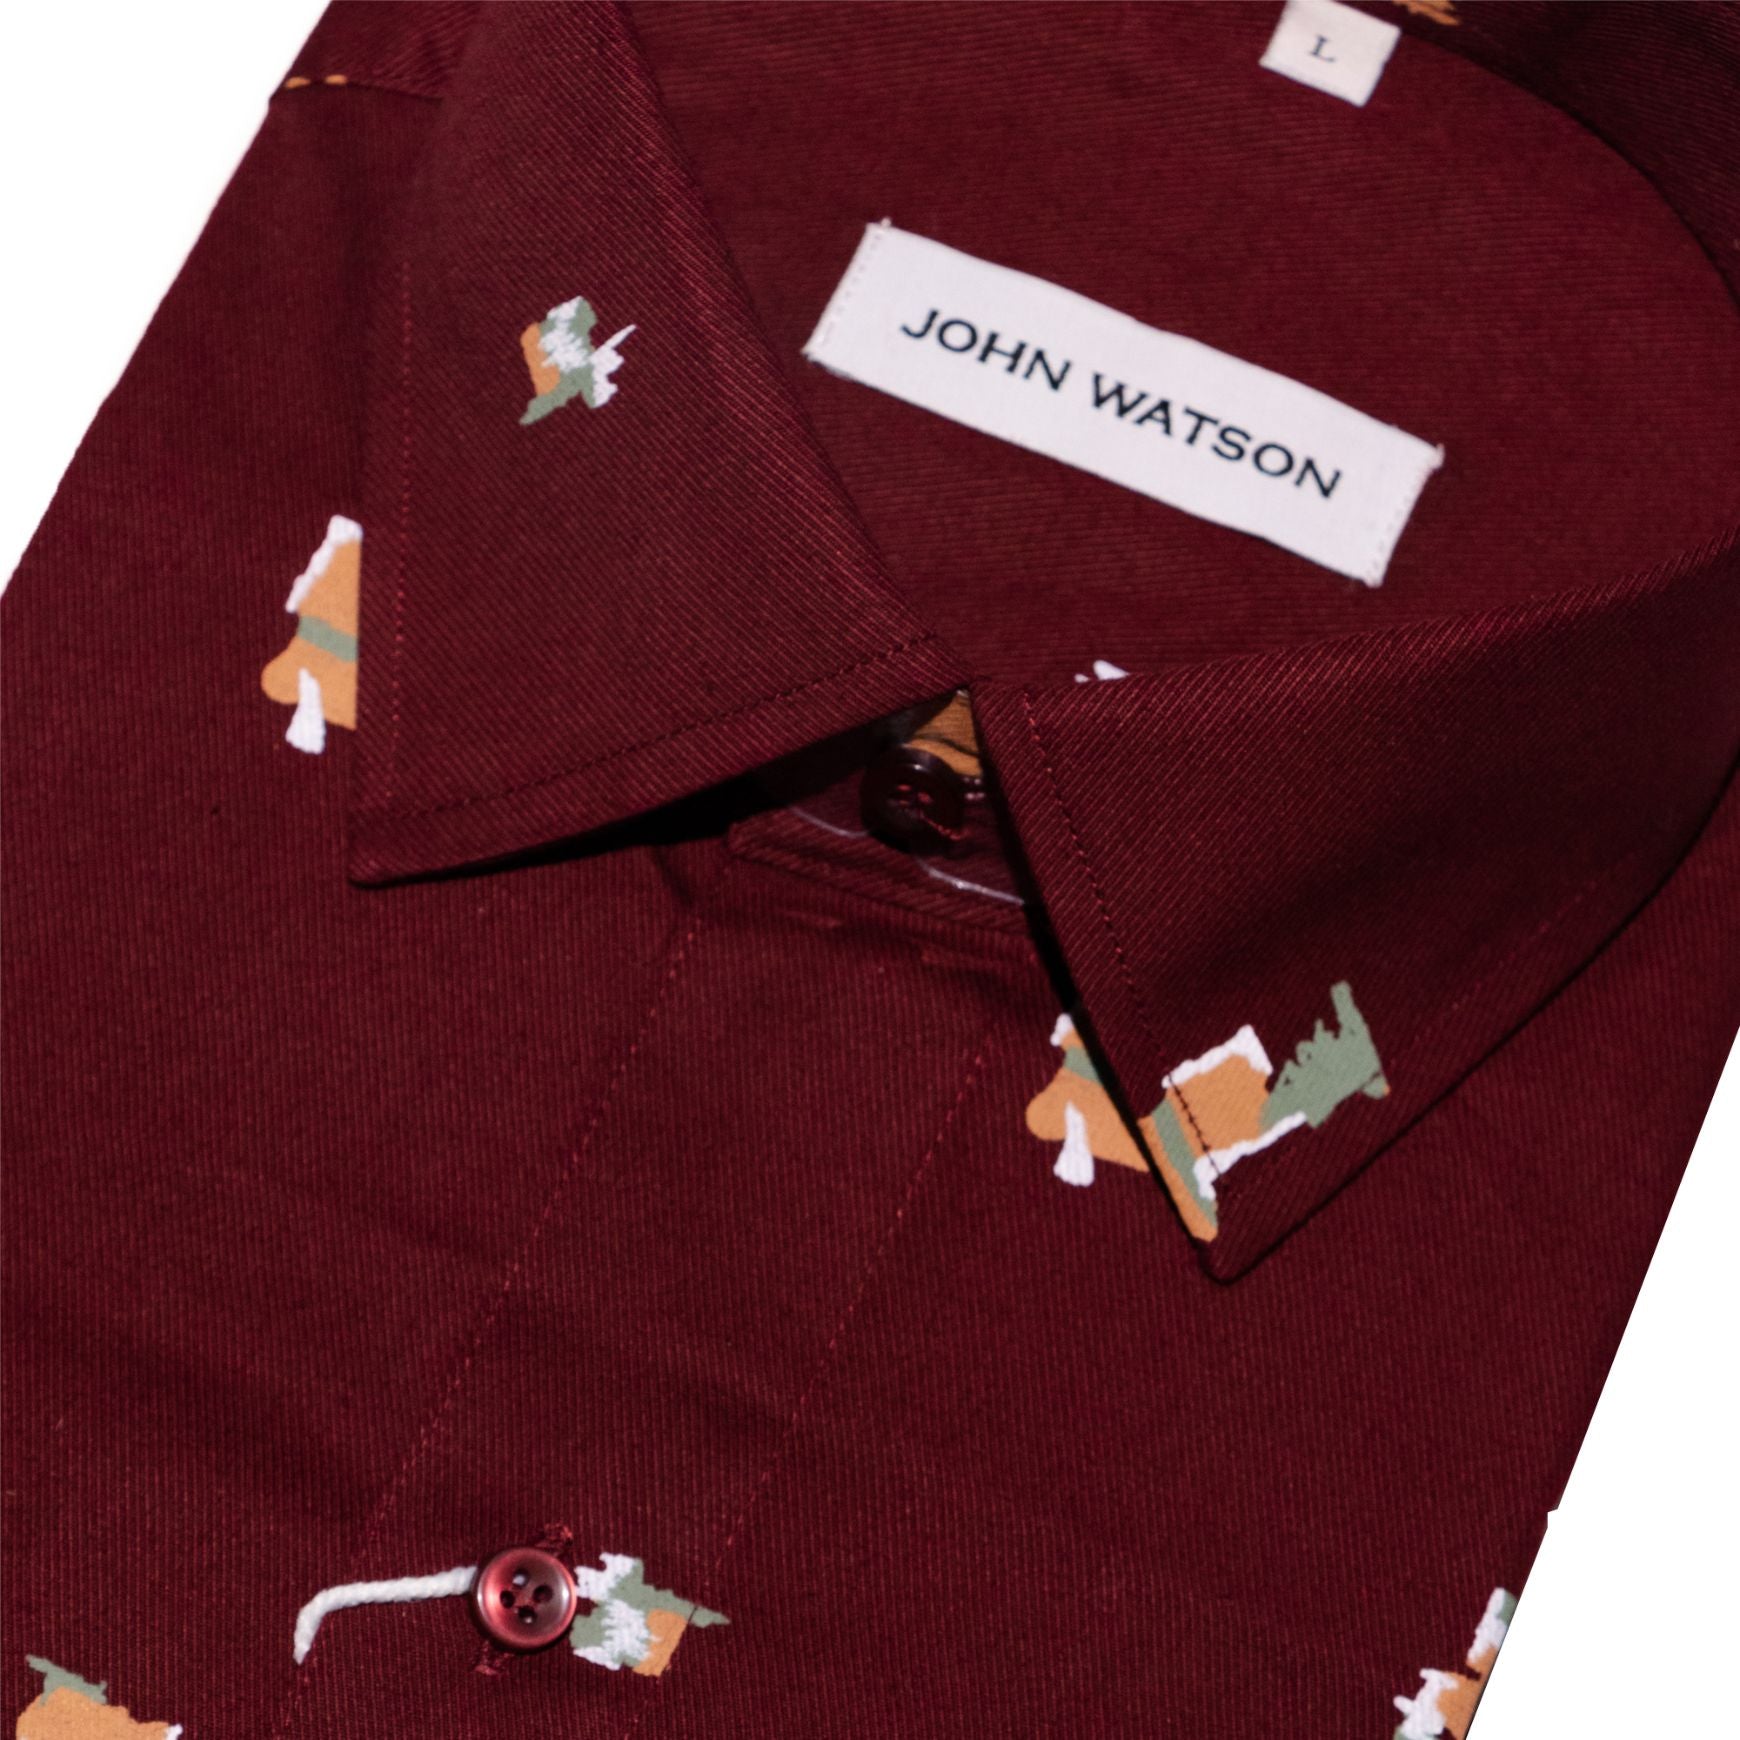 Motmot - Printed twill Shirt - Red - John Watson